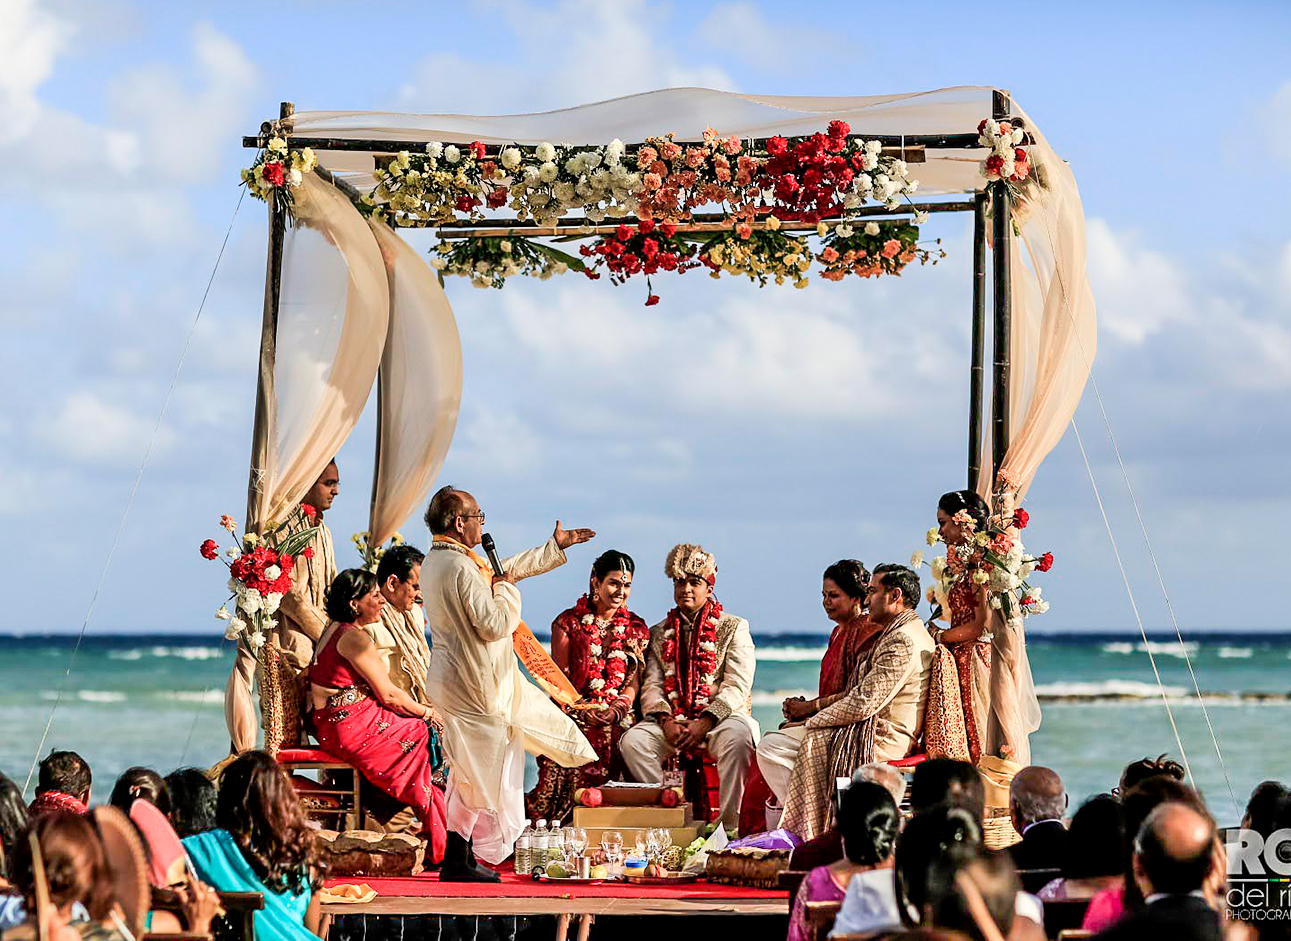 Destination Weddings - Memorable celebrations in picturesque locations